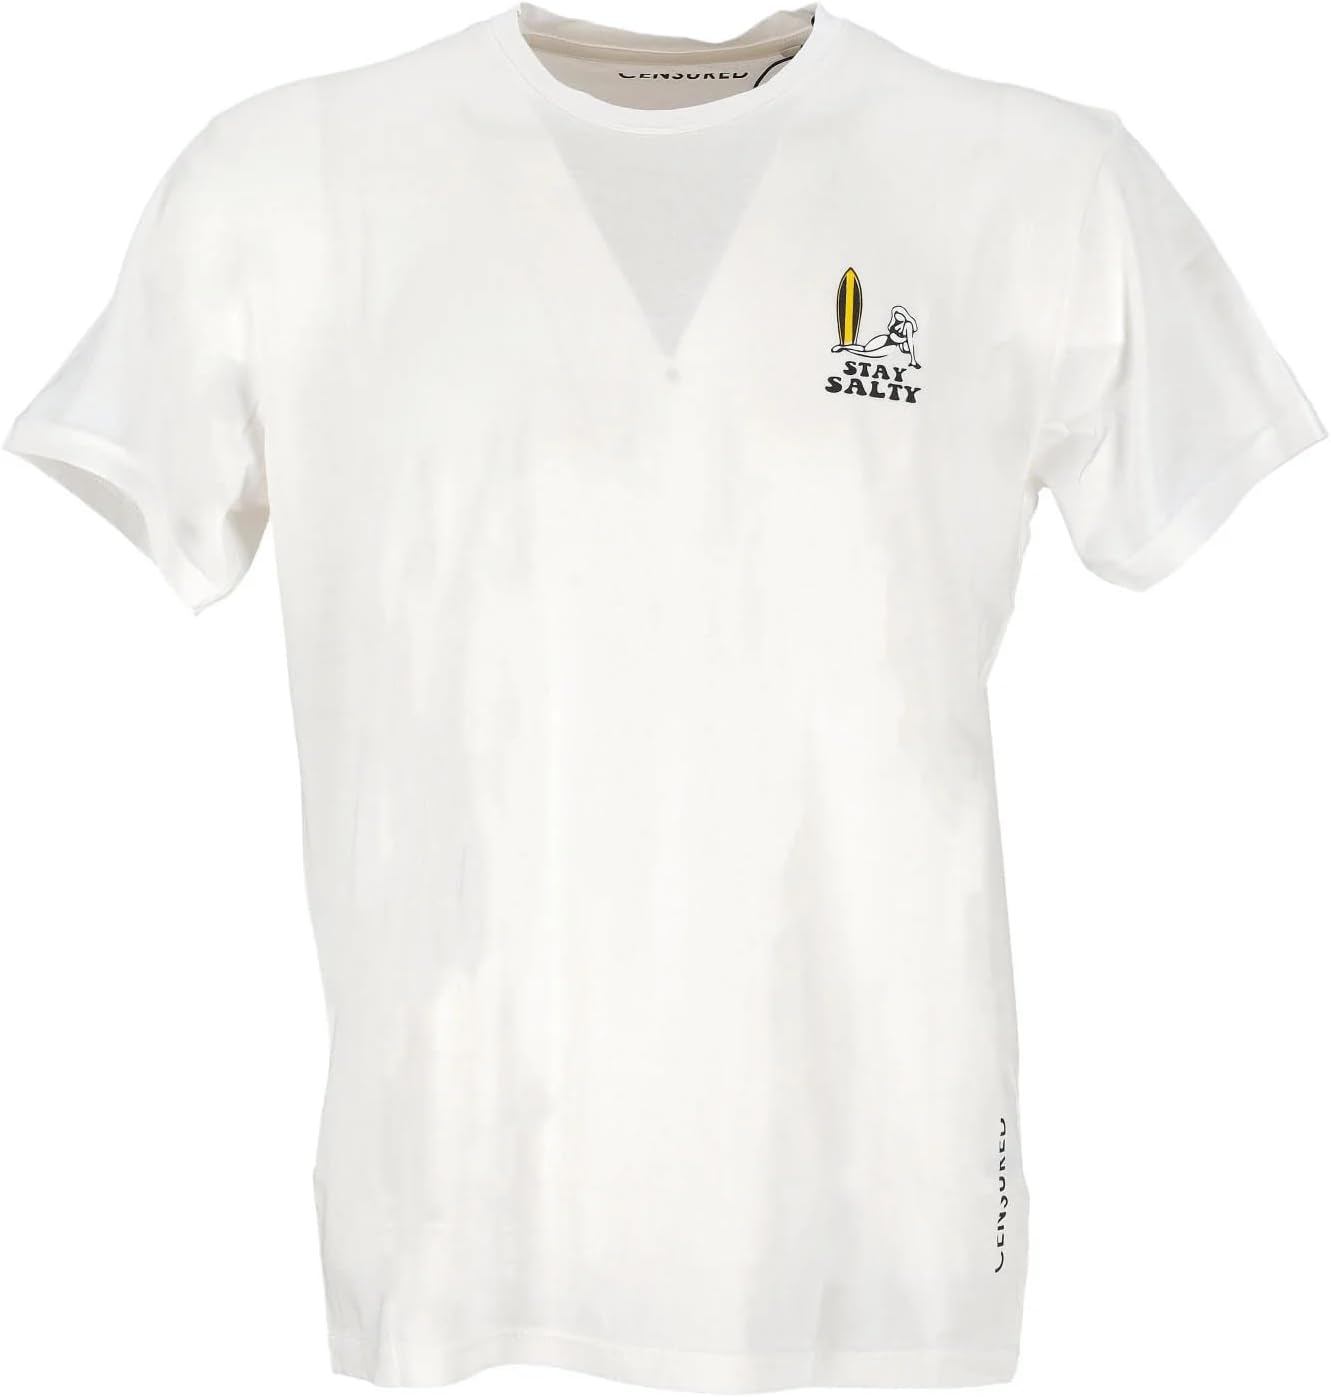 CENSURED T-shirt Uomo - Bianco modello TMC234